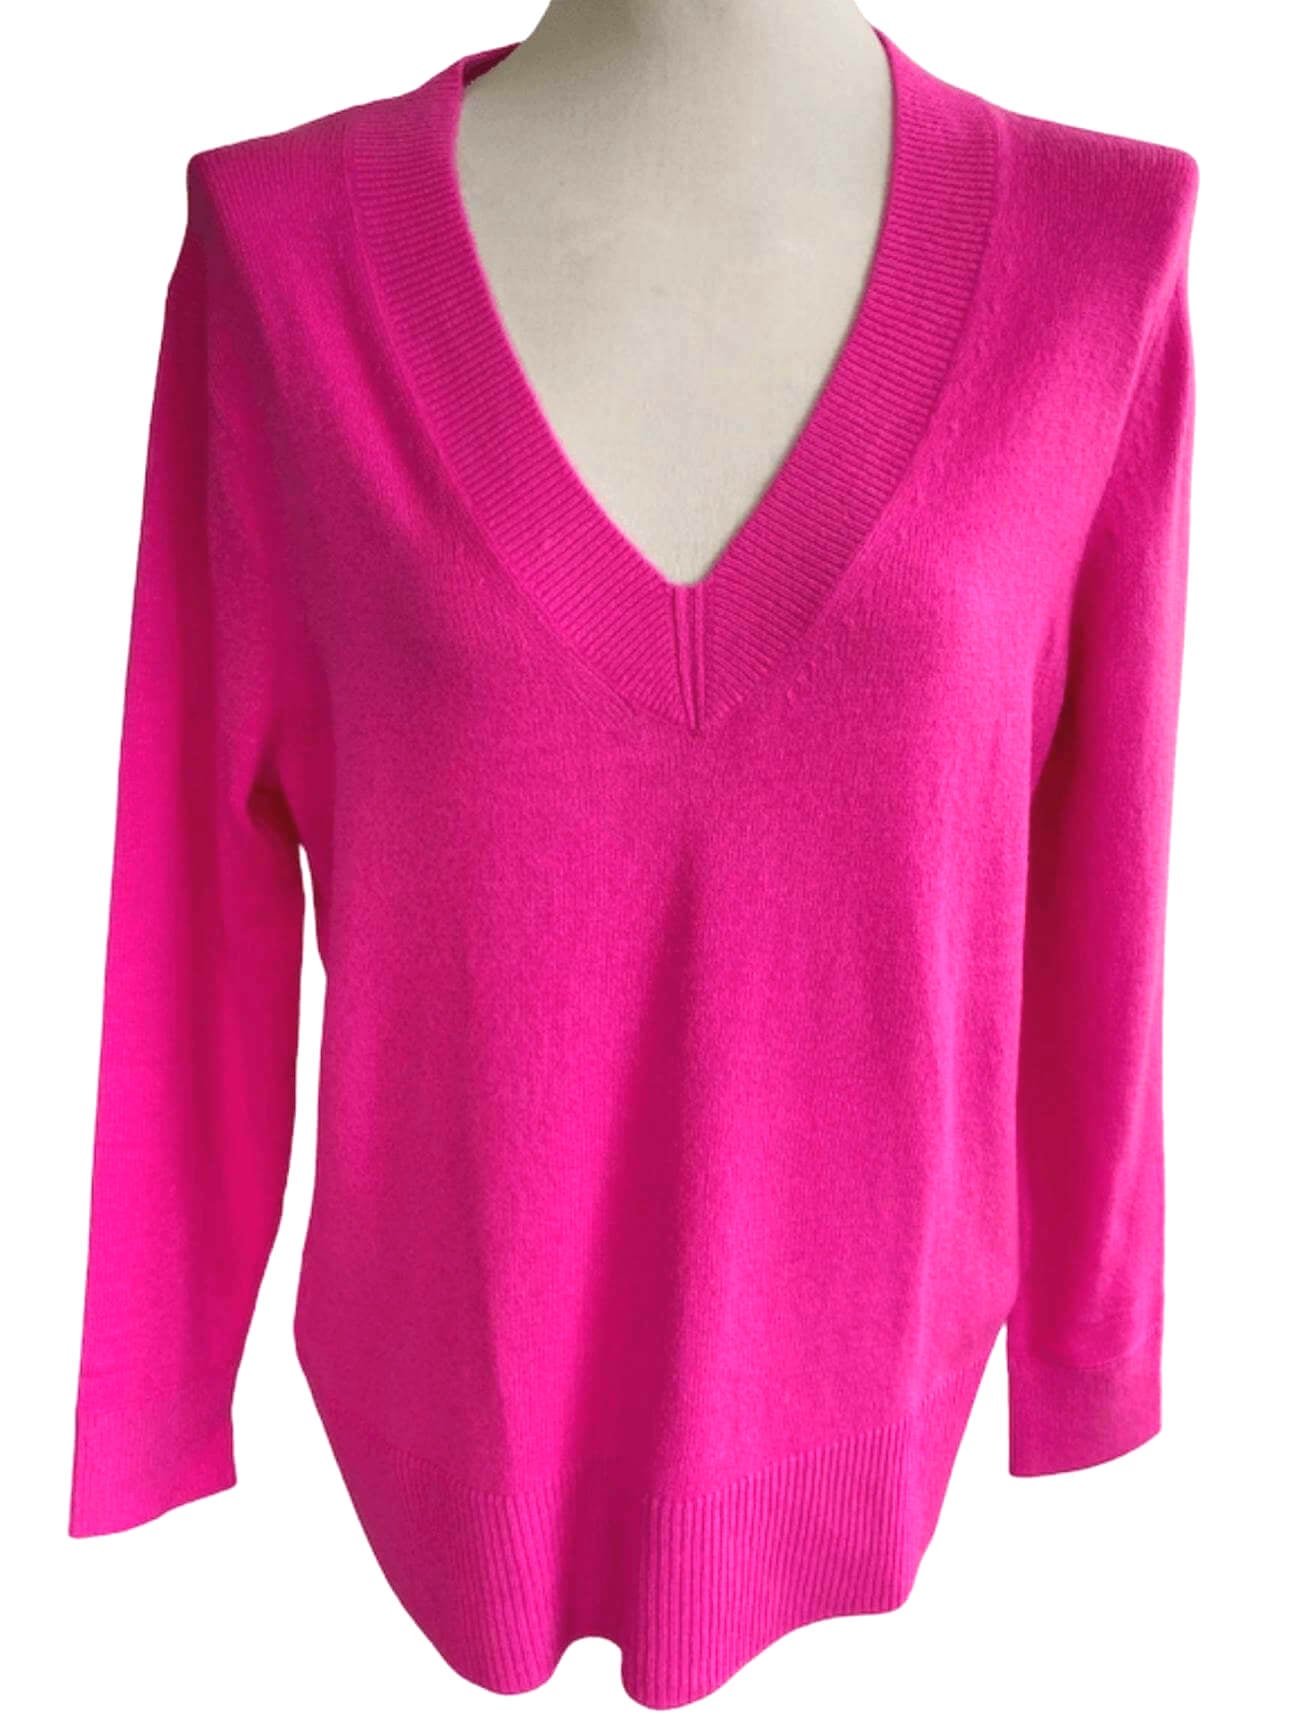 Bright Winter BANANA REPUBLIC pink v-neck sweater